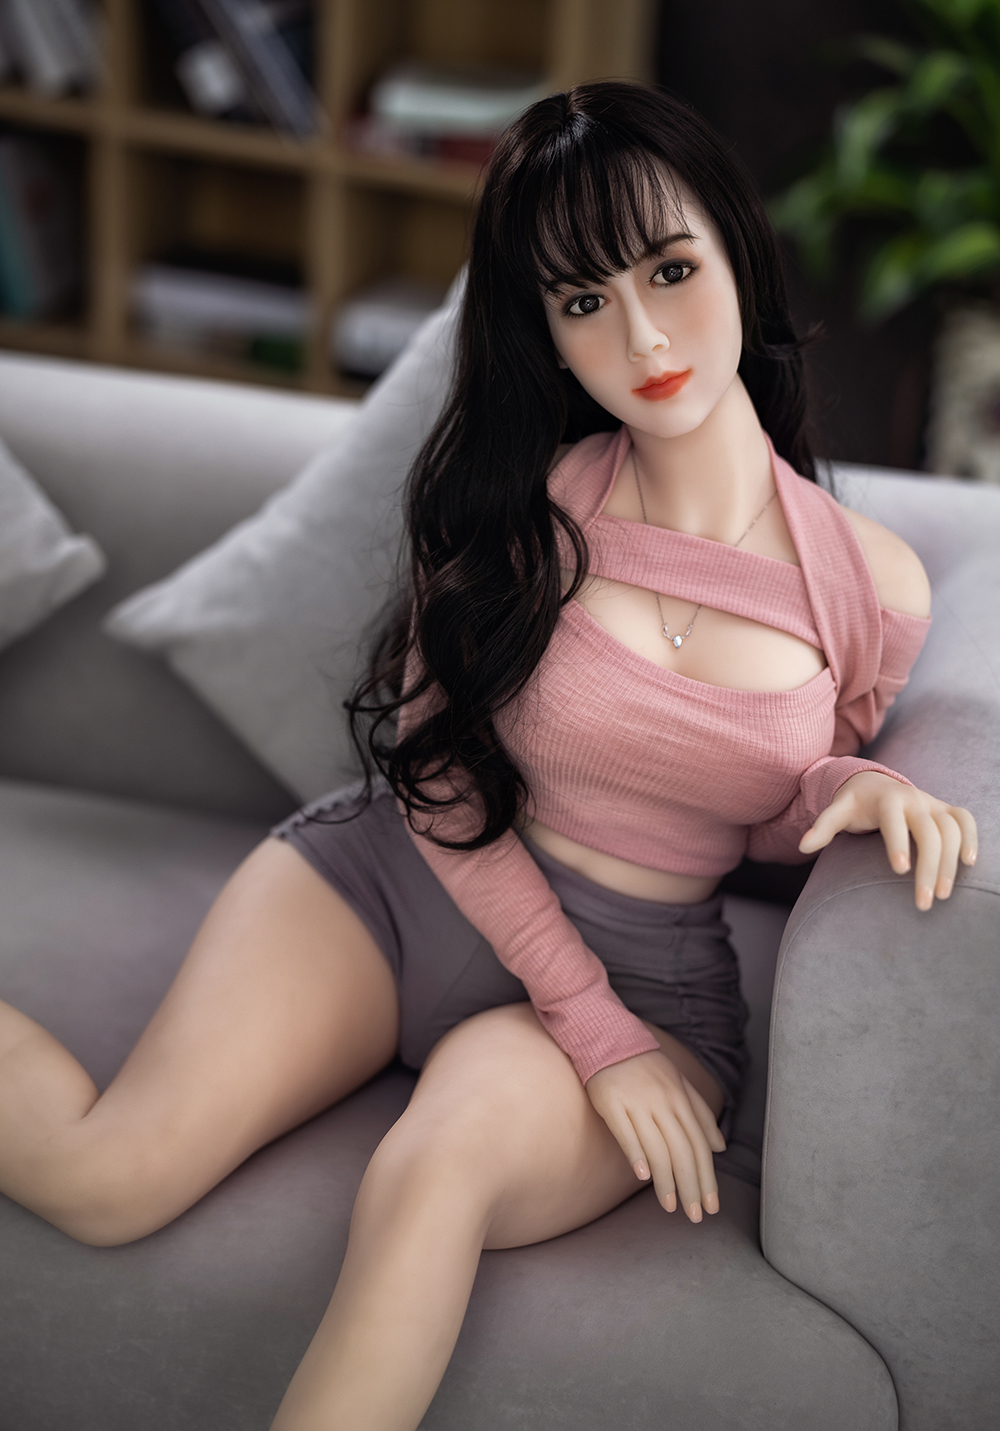 chubby girl sex dolls